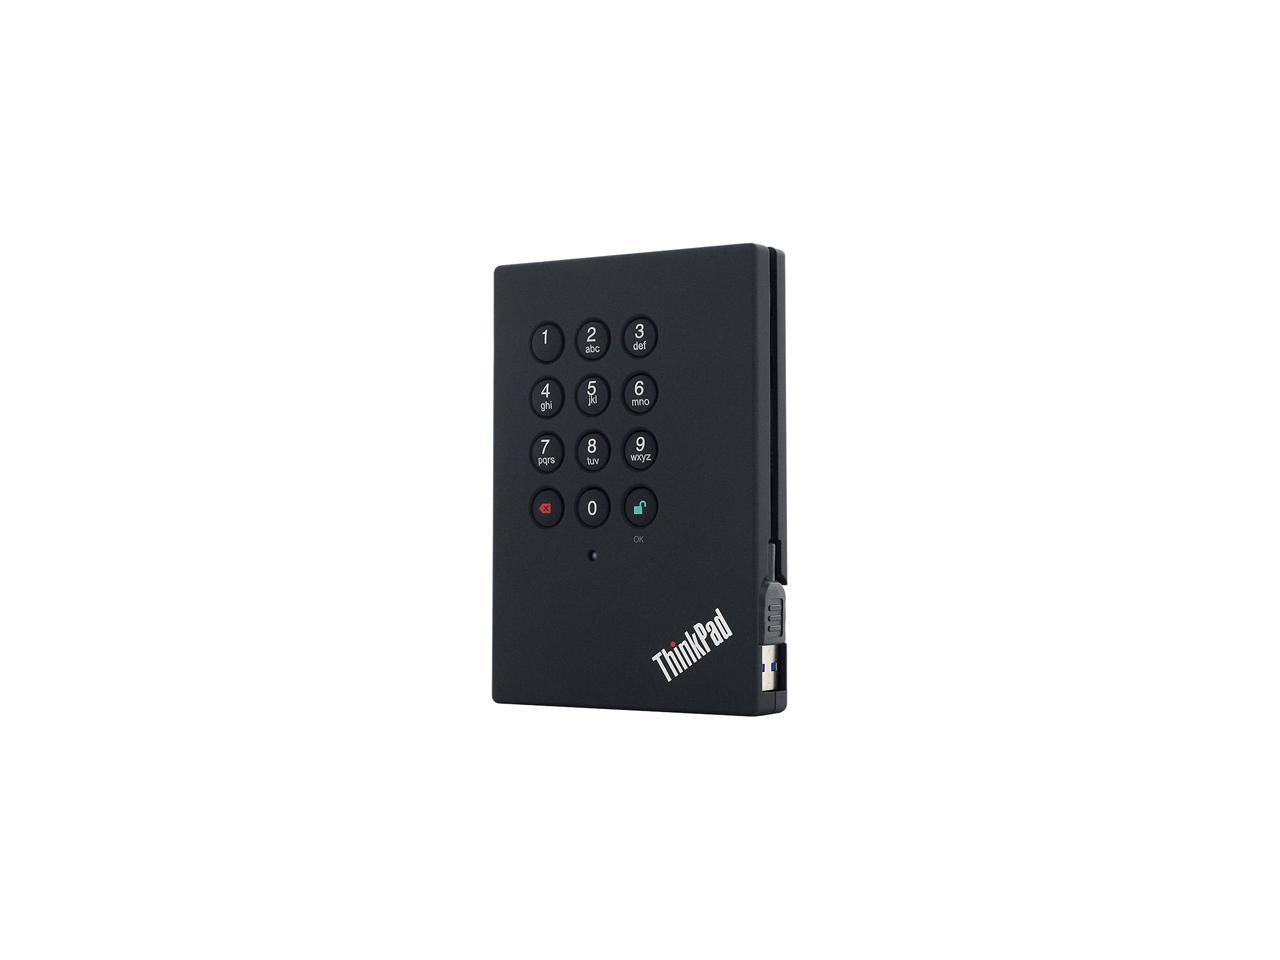 Lenovo 1TB ThinkPad Portable Secure External Hard Drive USB 3.0 Model 0A65621 Black